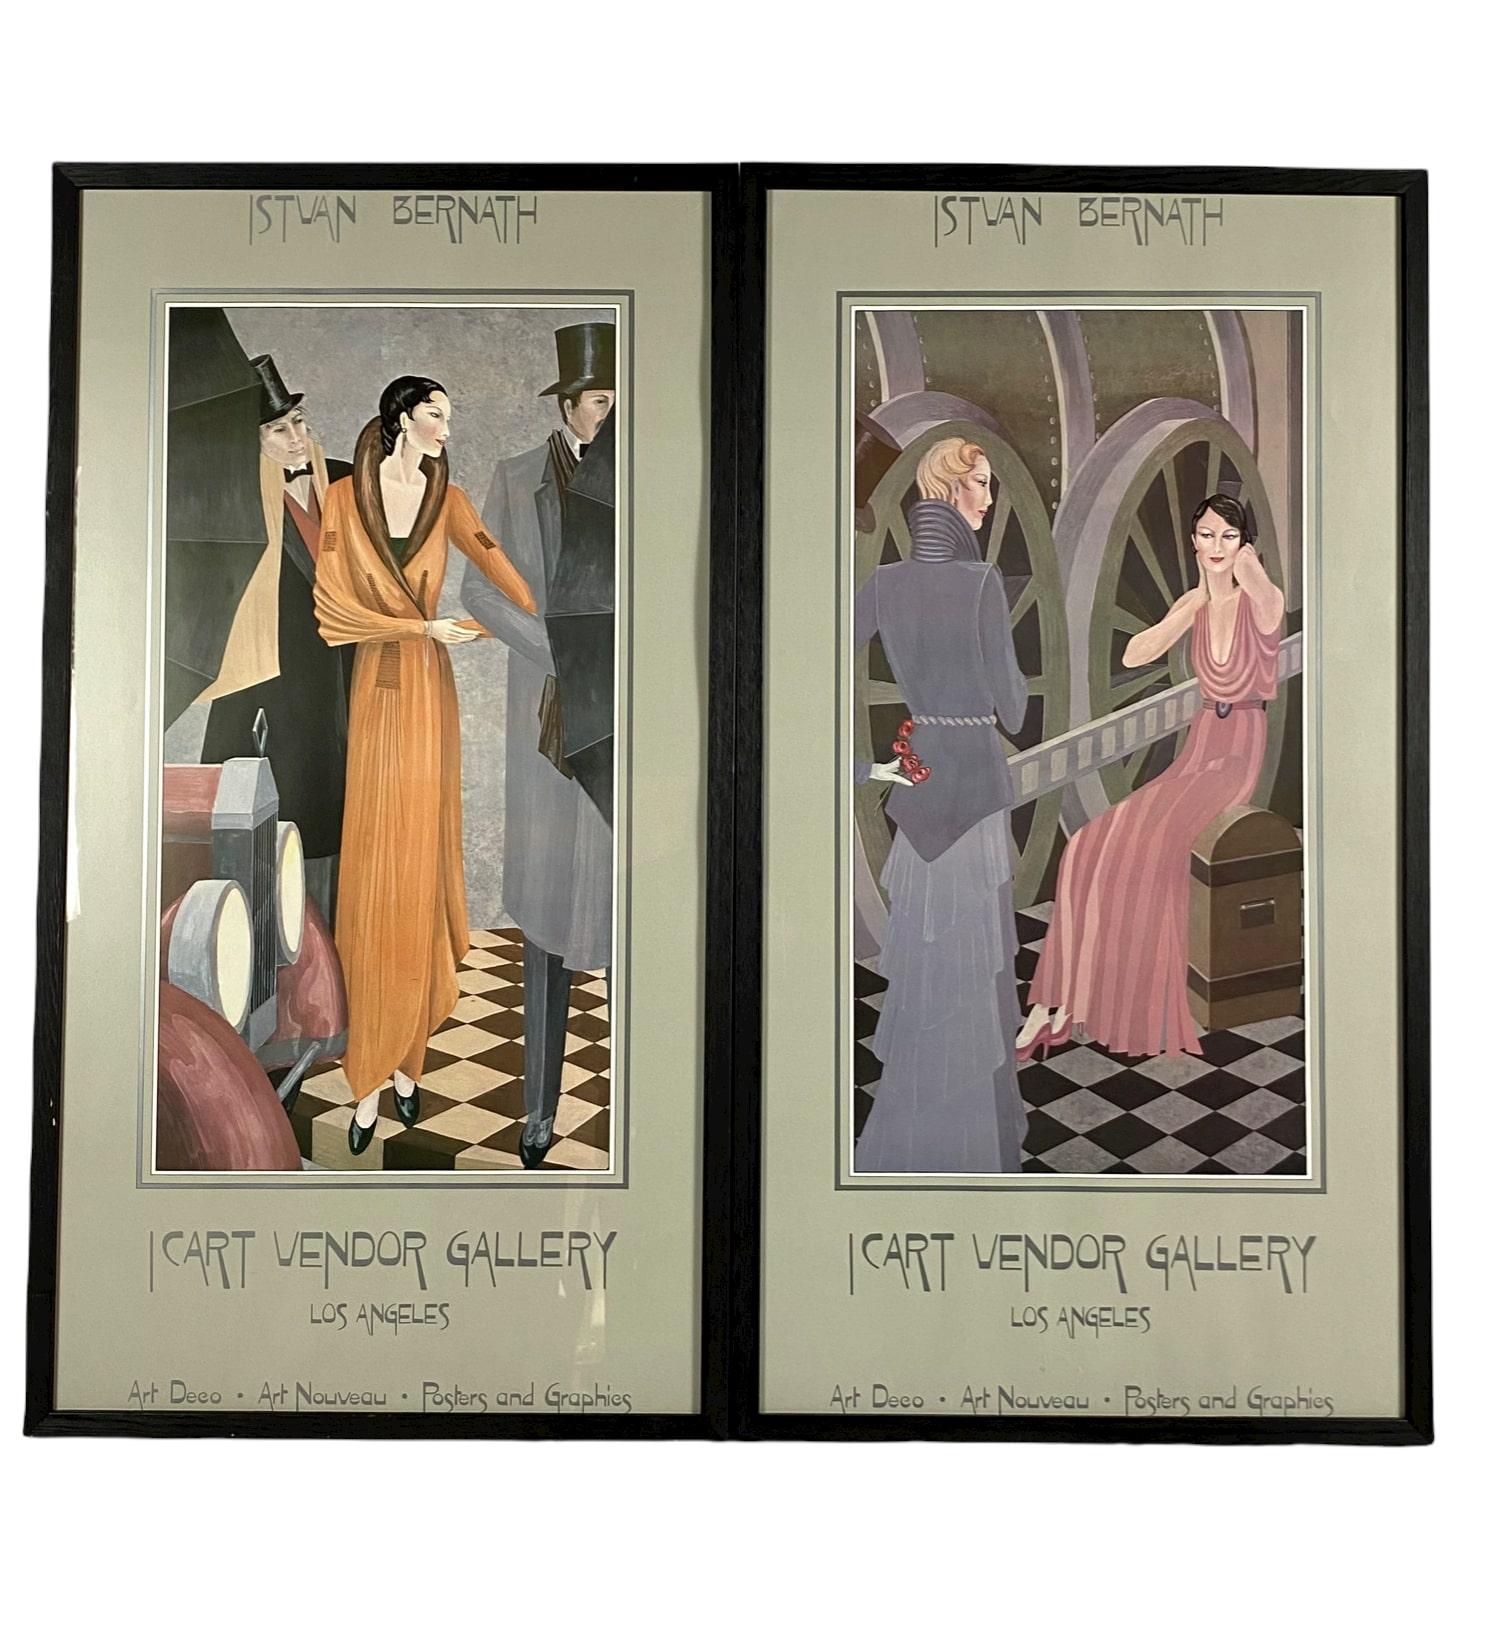 Paper Istvan Bernath, Set of 2 Art Deco Lithographs, Icart Vendor Gallery, Los Angeles For Sale